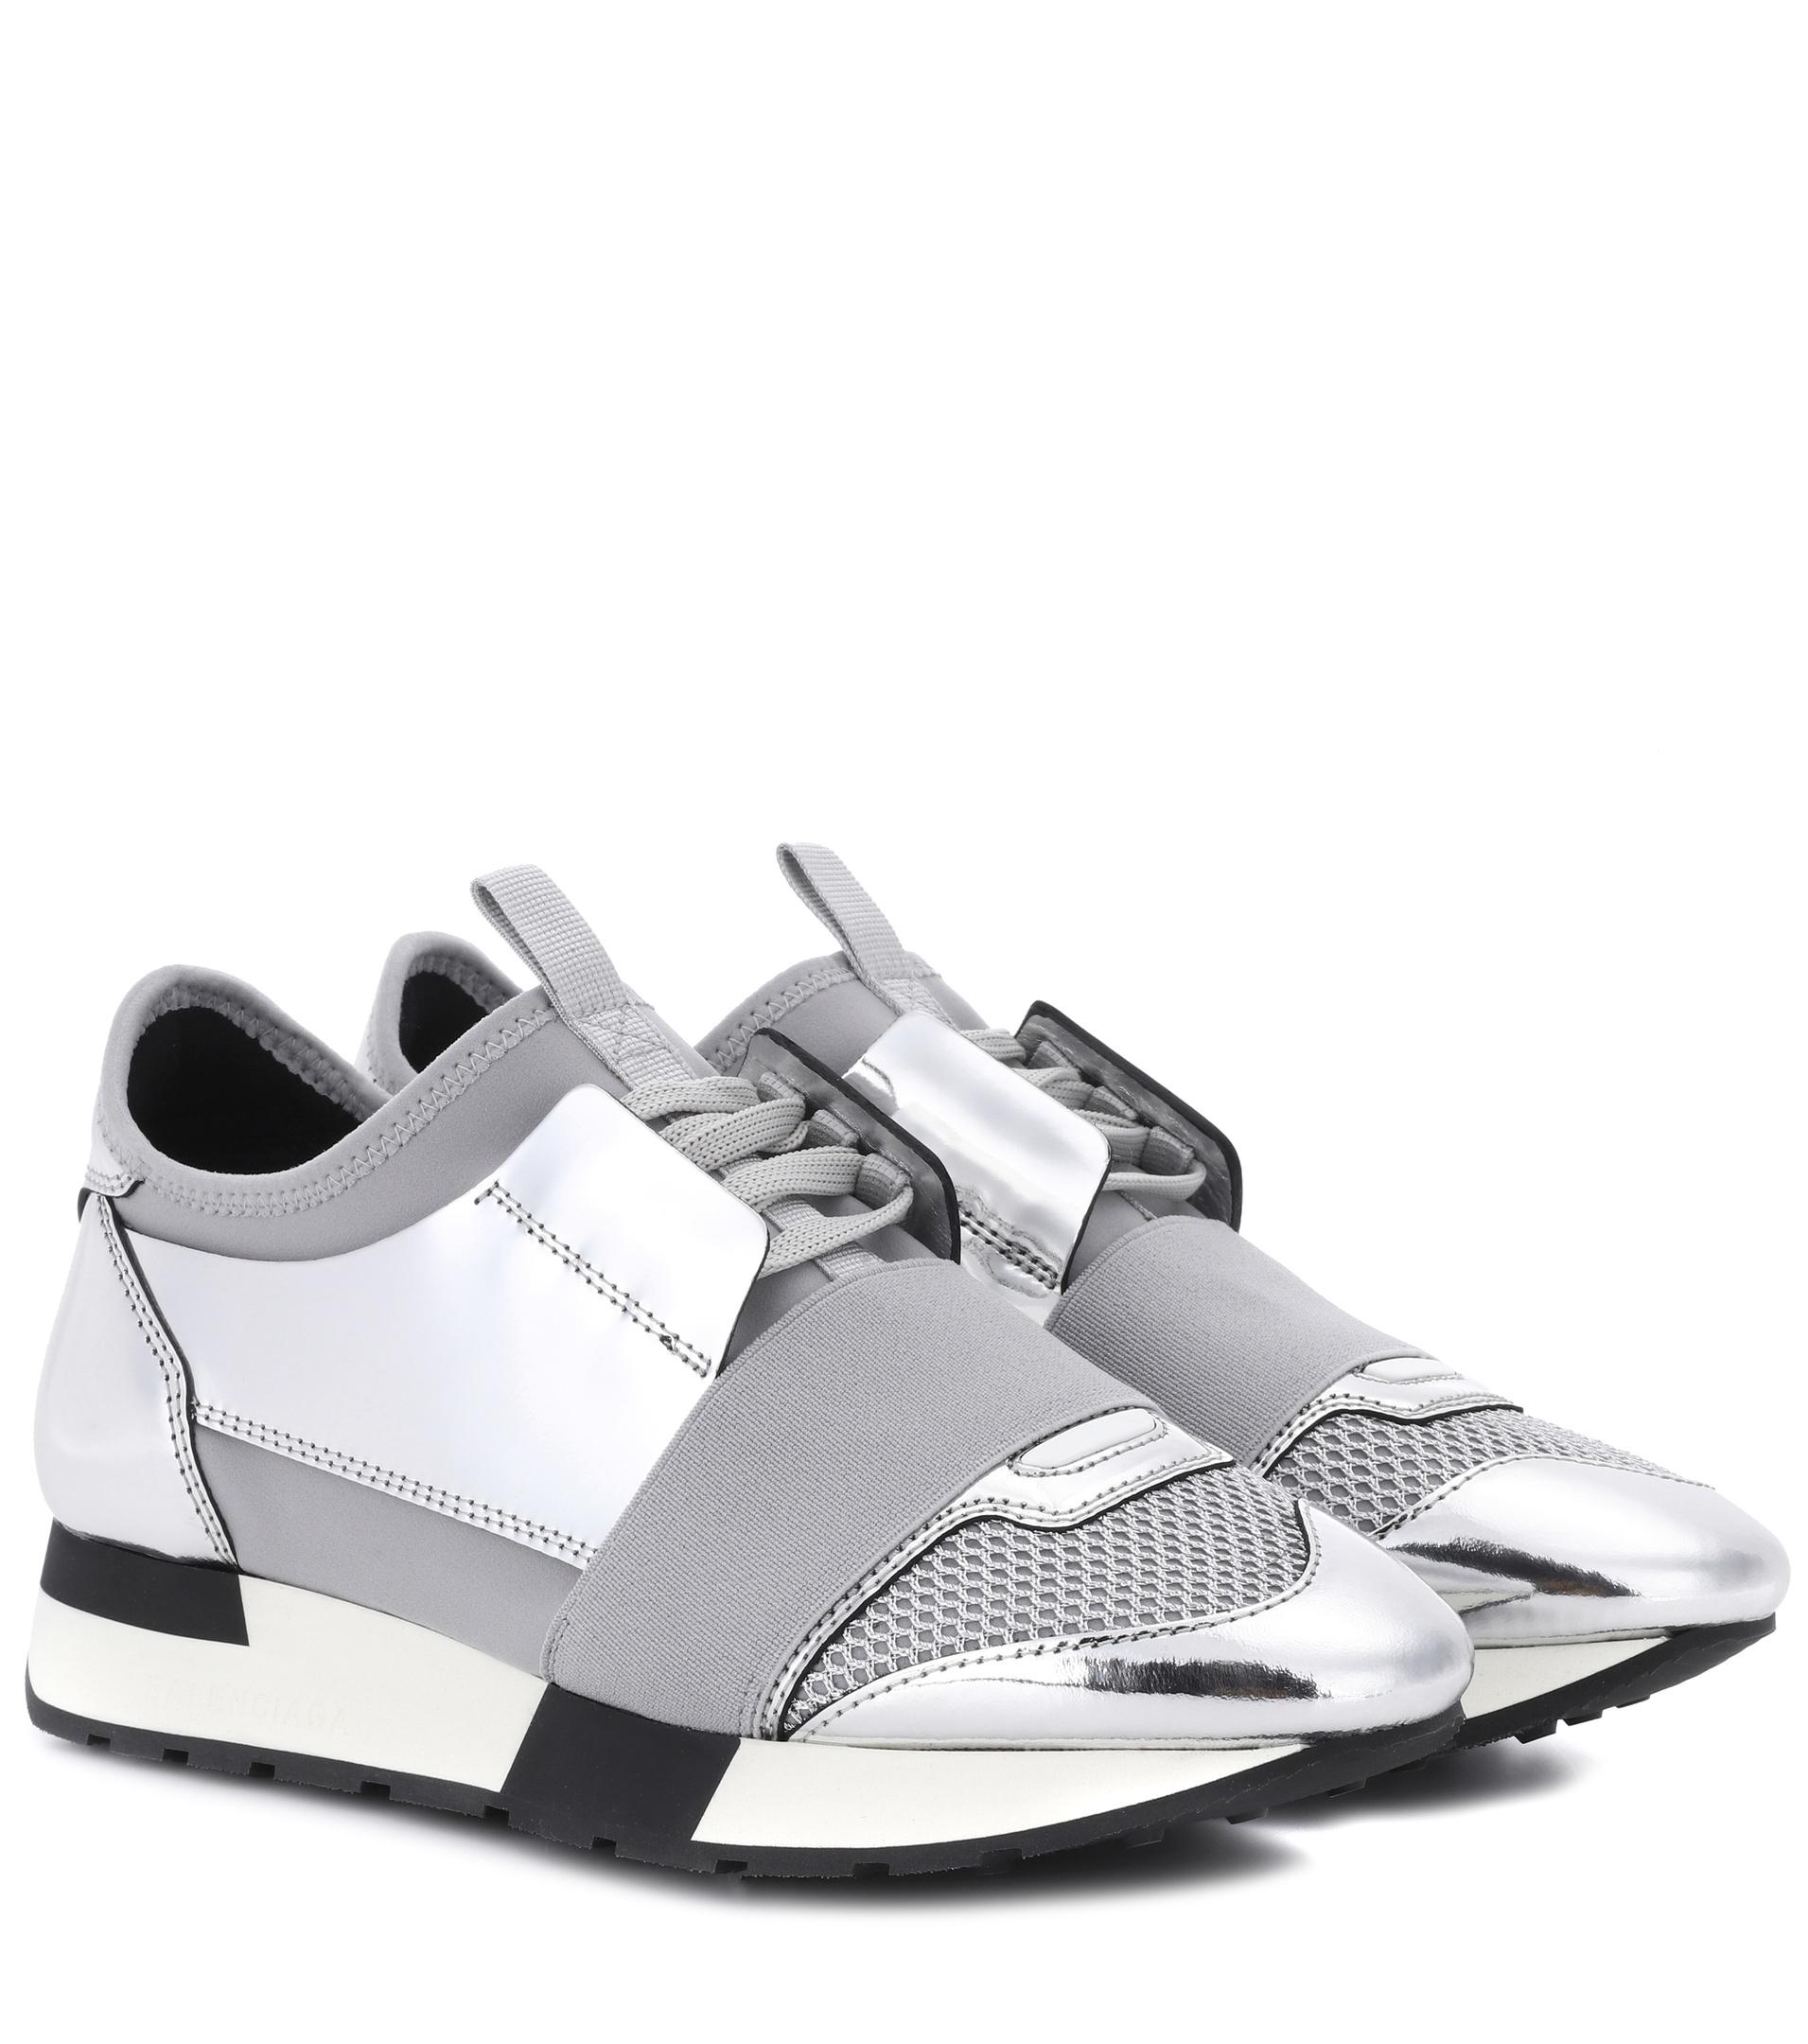 Balenciaga Race Runner Leather Sneakers in Silver (Metallic) - Lyst